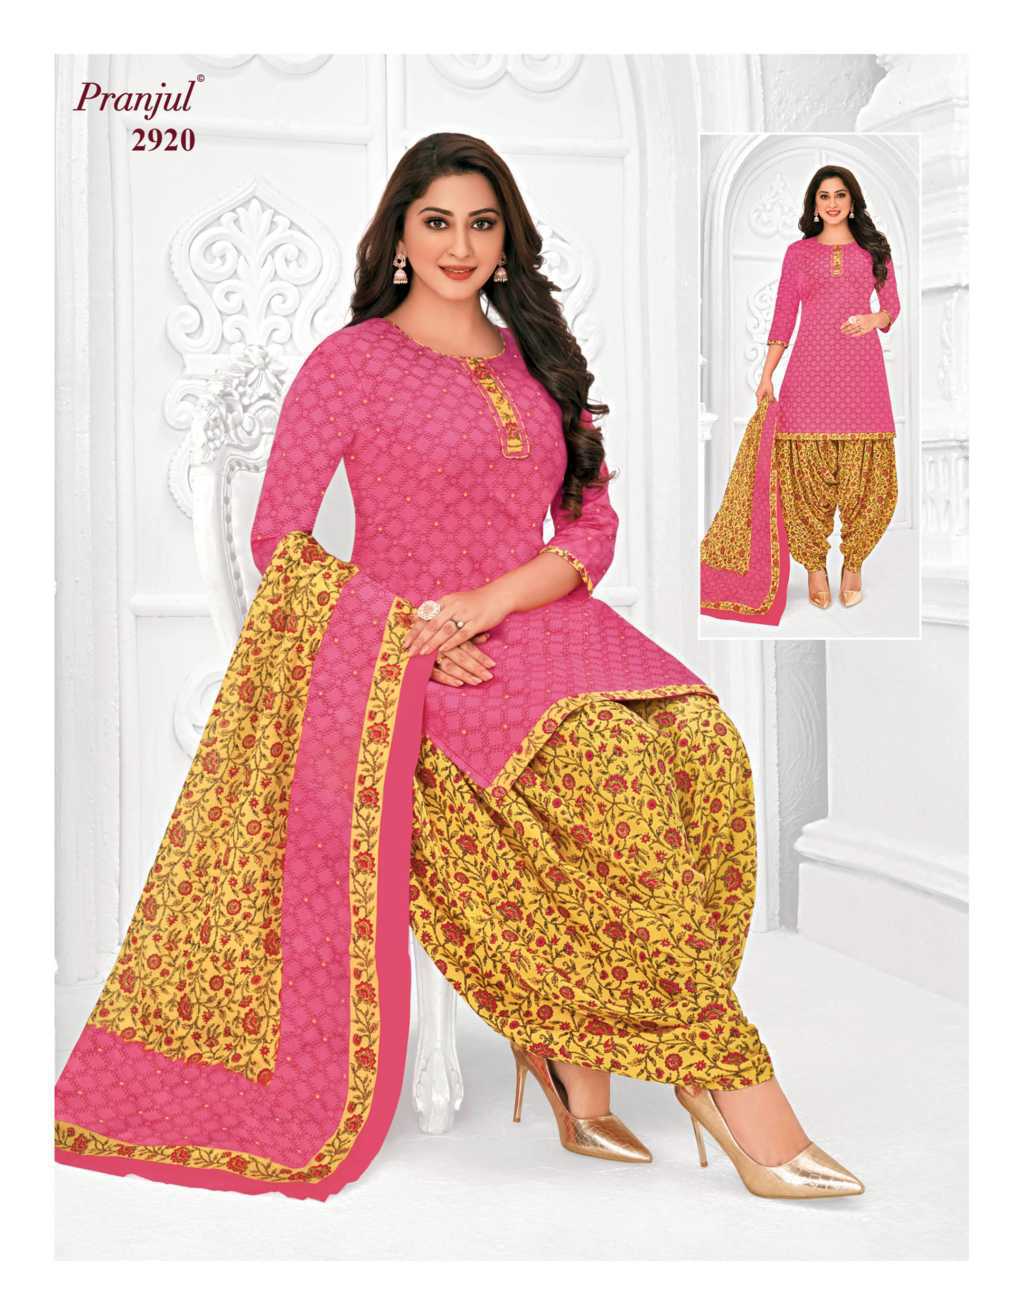 Indian Woman Suit Cotton Summer Dress Readymade Salwar Kameez | eBay